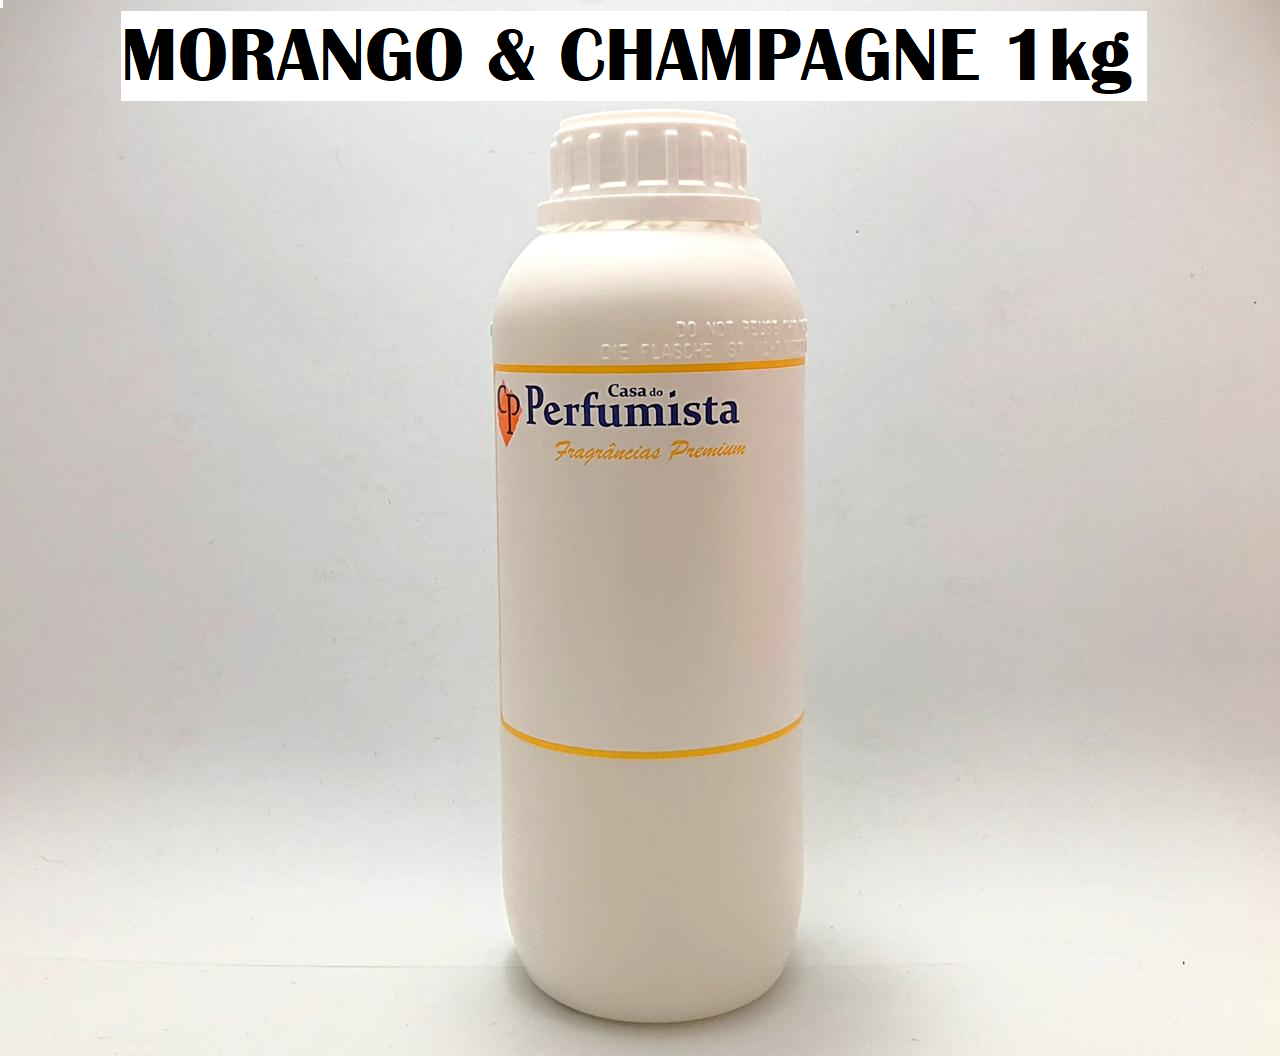 MORANGO E CHAMPAGNE - 1kg